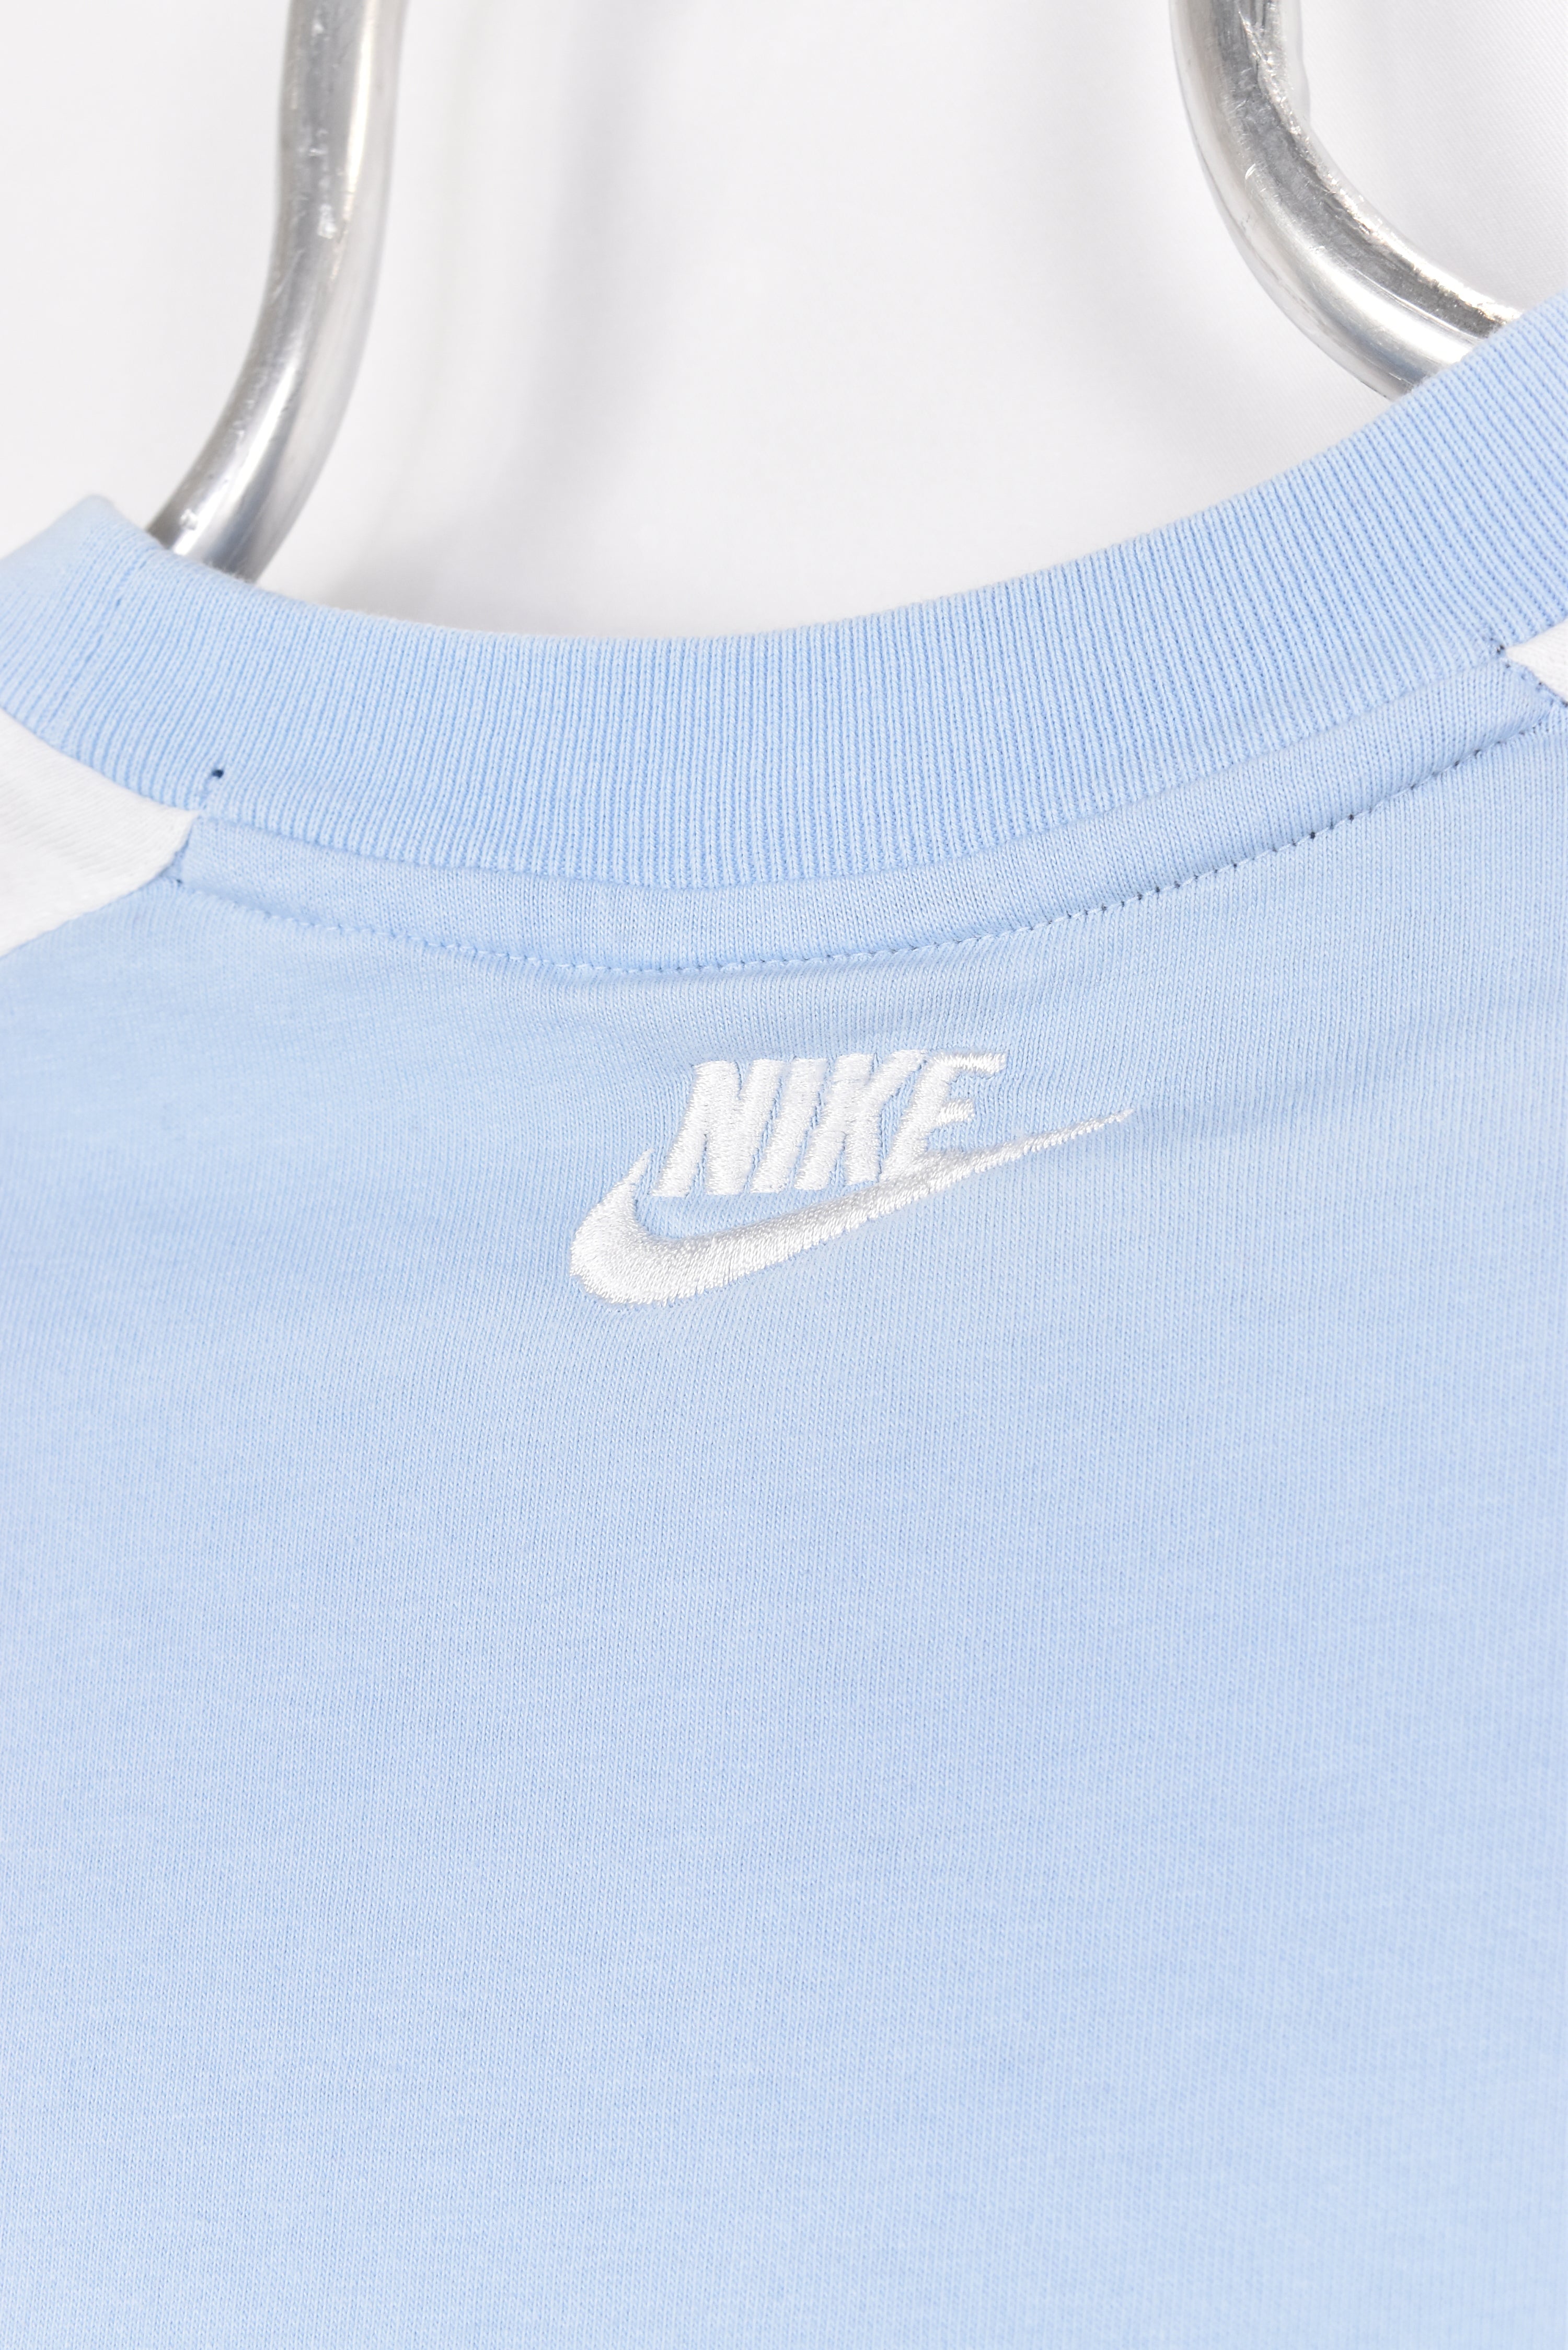 Vintage Nike shirt, blue graphic tee - AU S NIKE